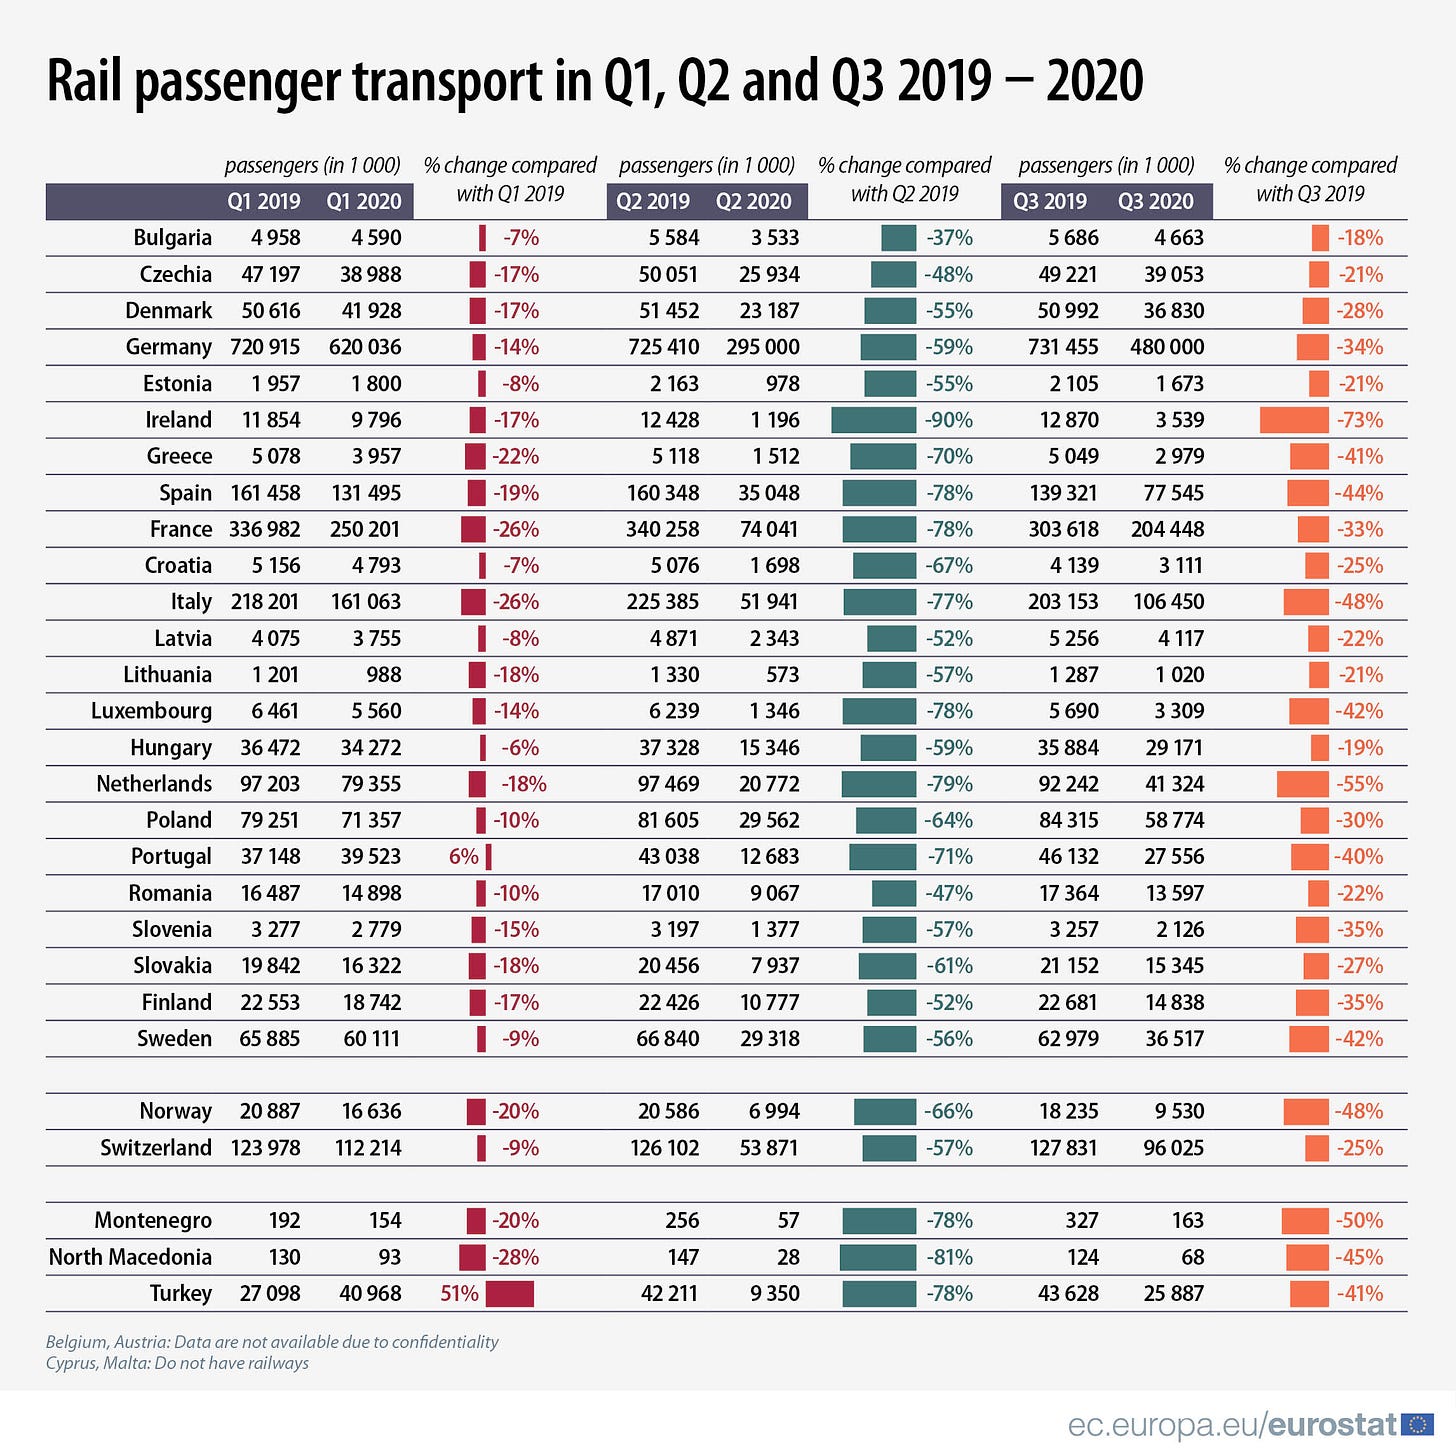 Rail passenger transport in Q1, Q2 and Q3 2019 - 2020